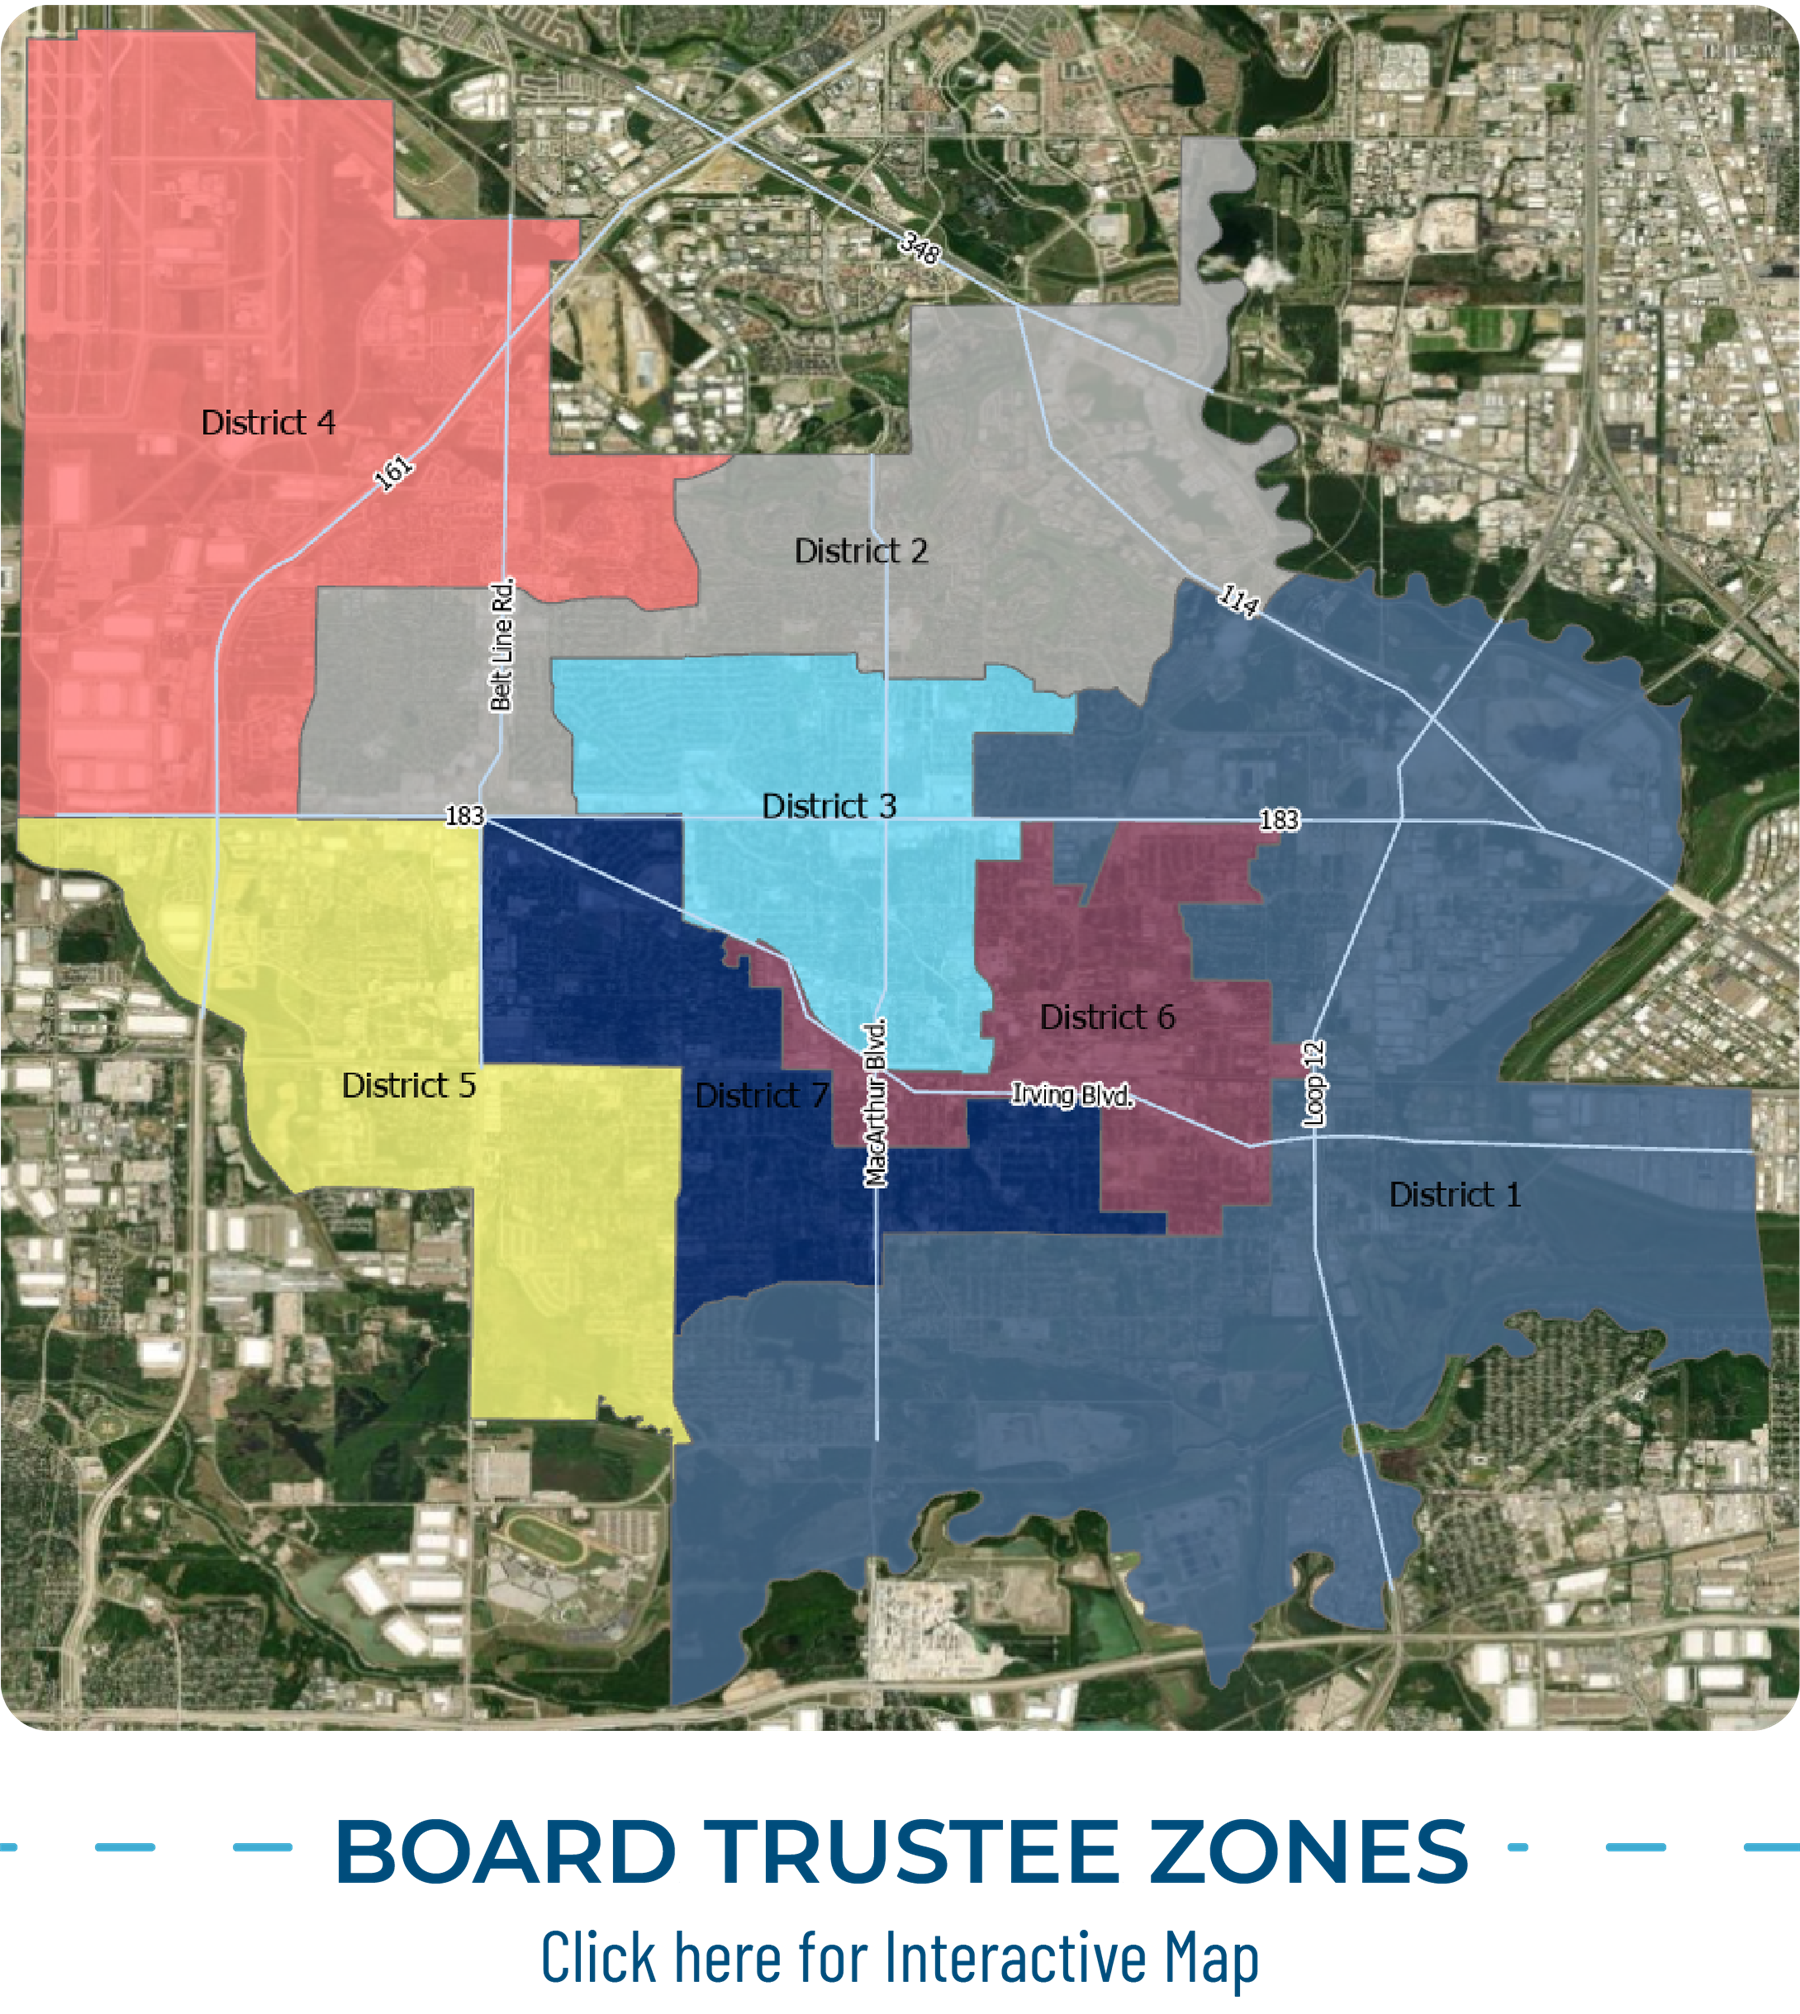 Board of Trustees Zones Image